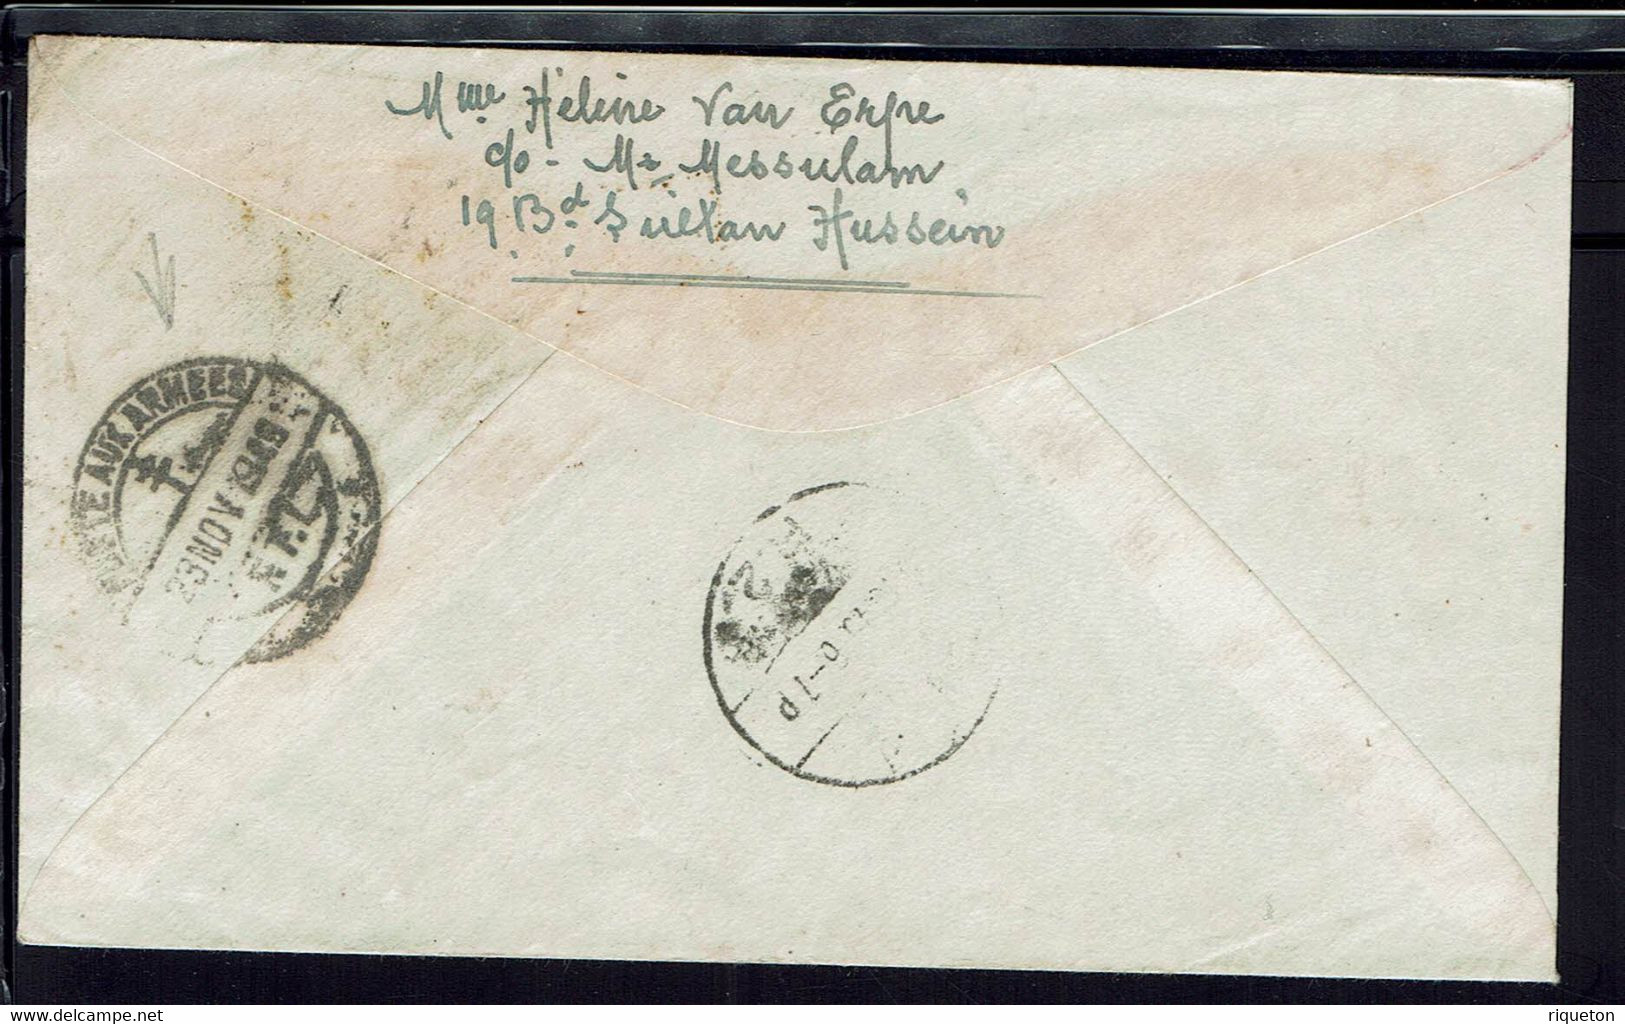 Egypte - Alexandrie - Enveloppe Recommandée Pour Beyrouth 10 Nov. 1945 - B/TB - - Covers & Documents